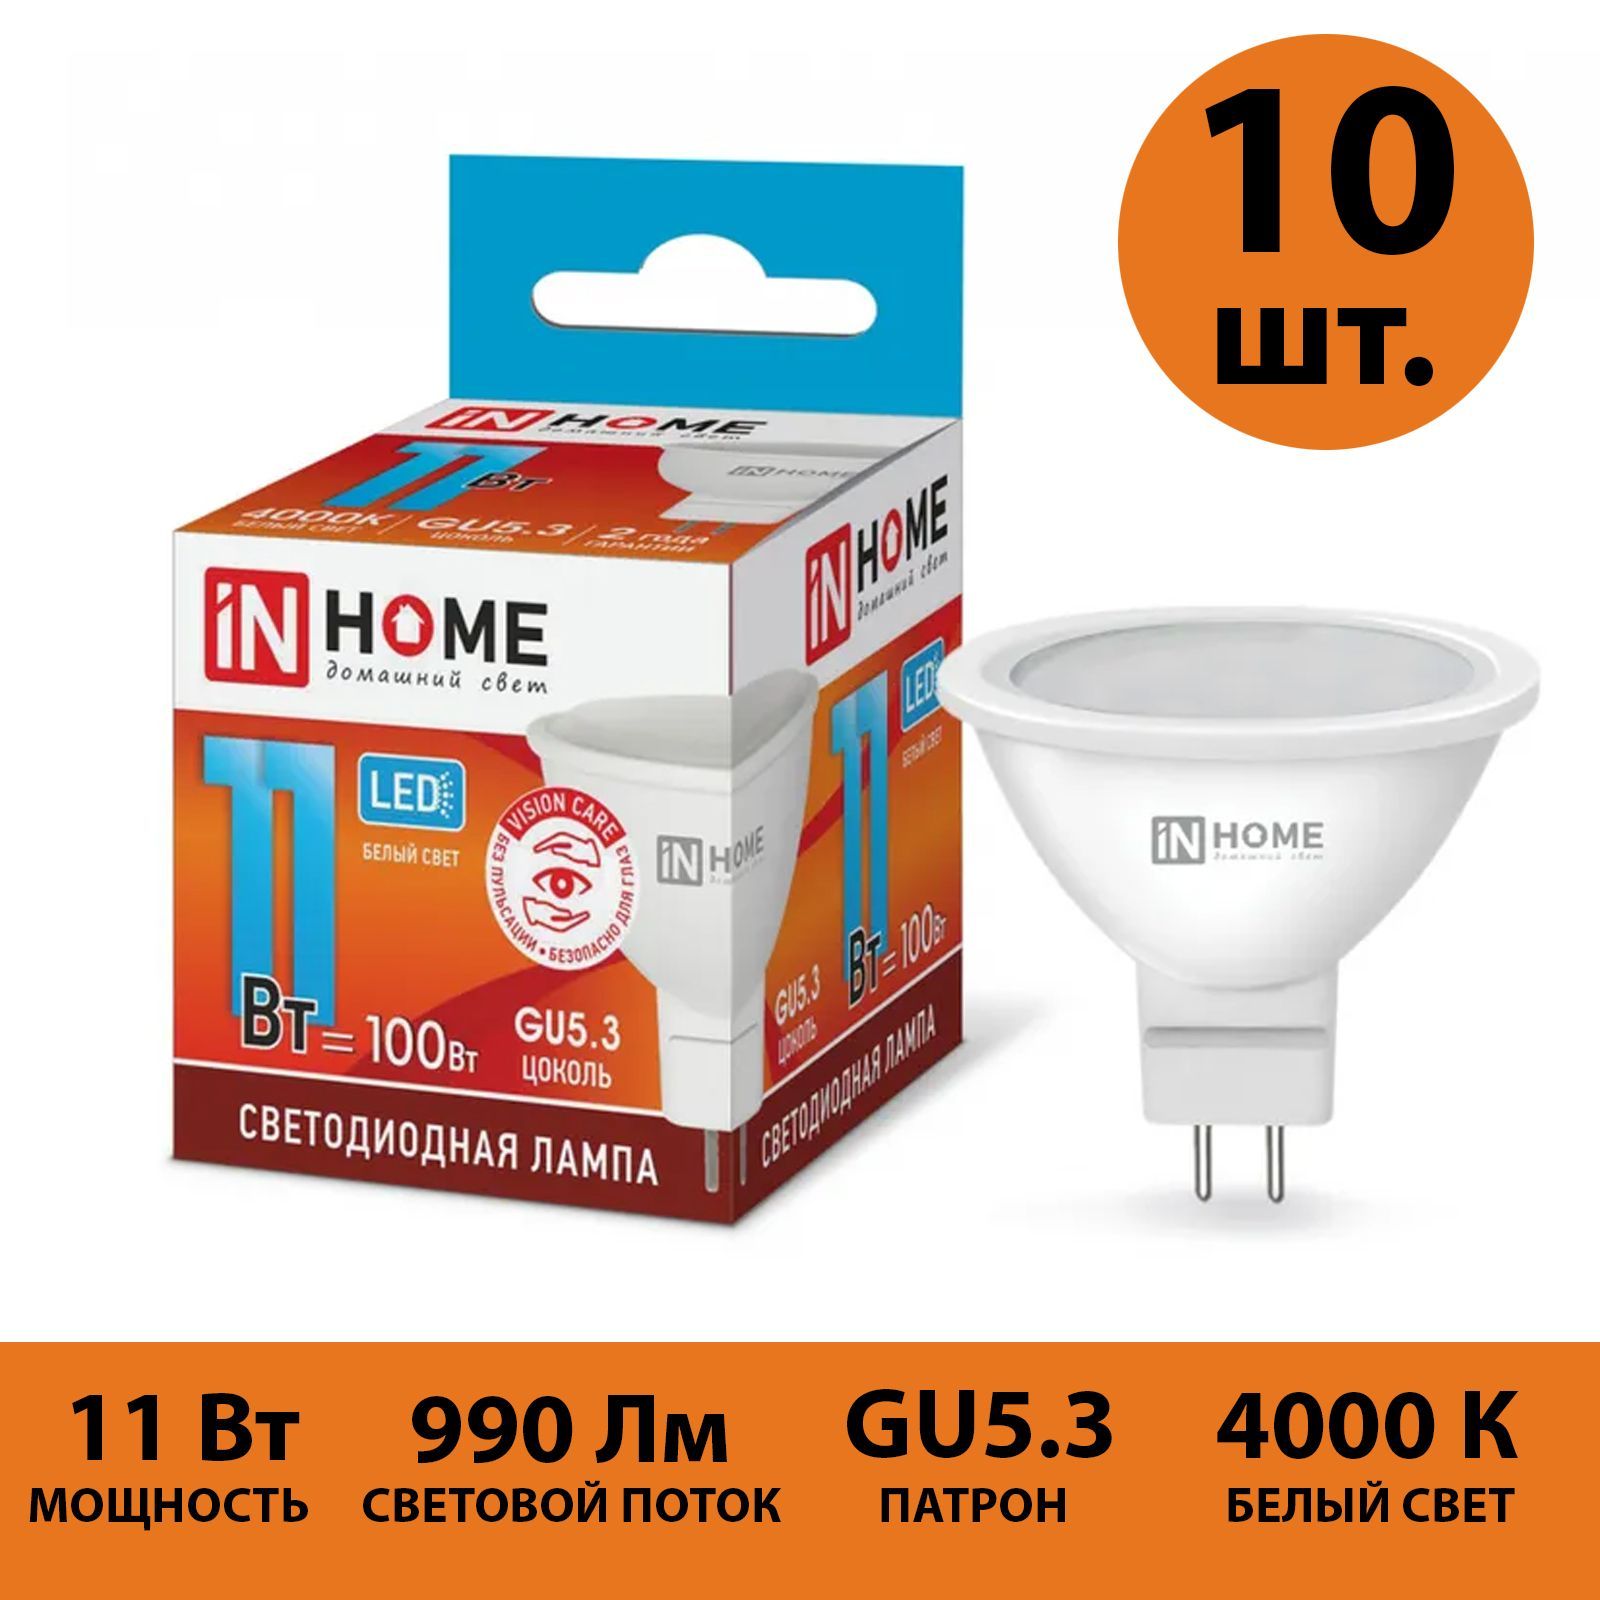 Лампа IN HOME GU5.3 10 шт нейтральный белый свет 4000К 990 Лм 11 Вт 230 В JCDR VC